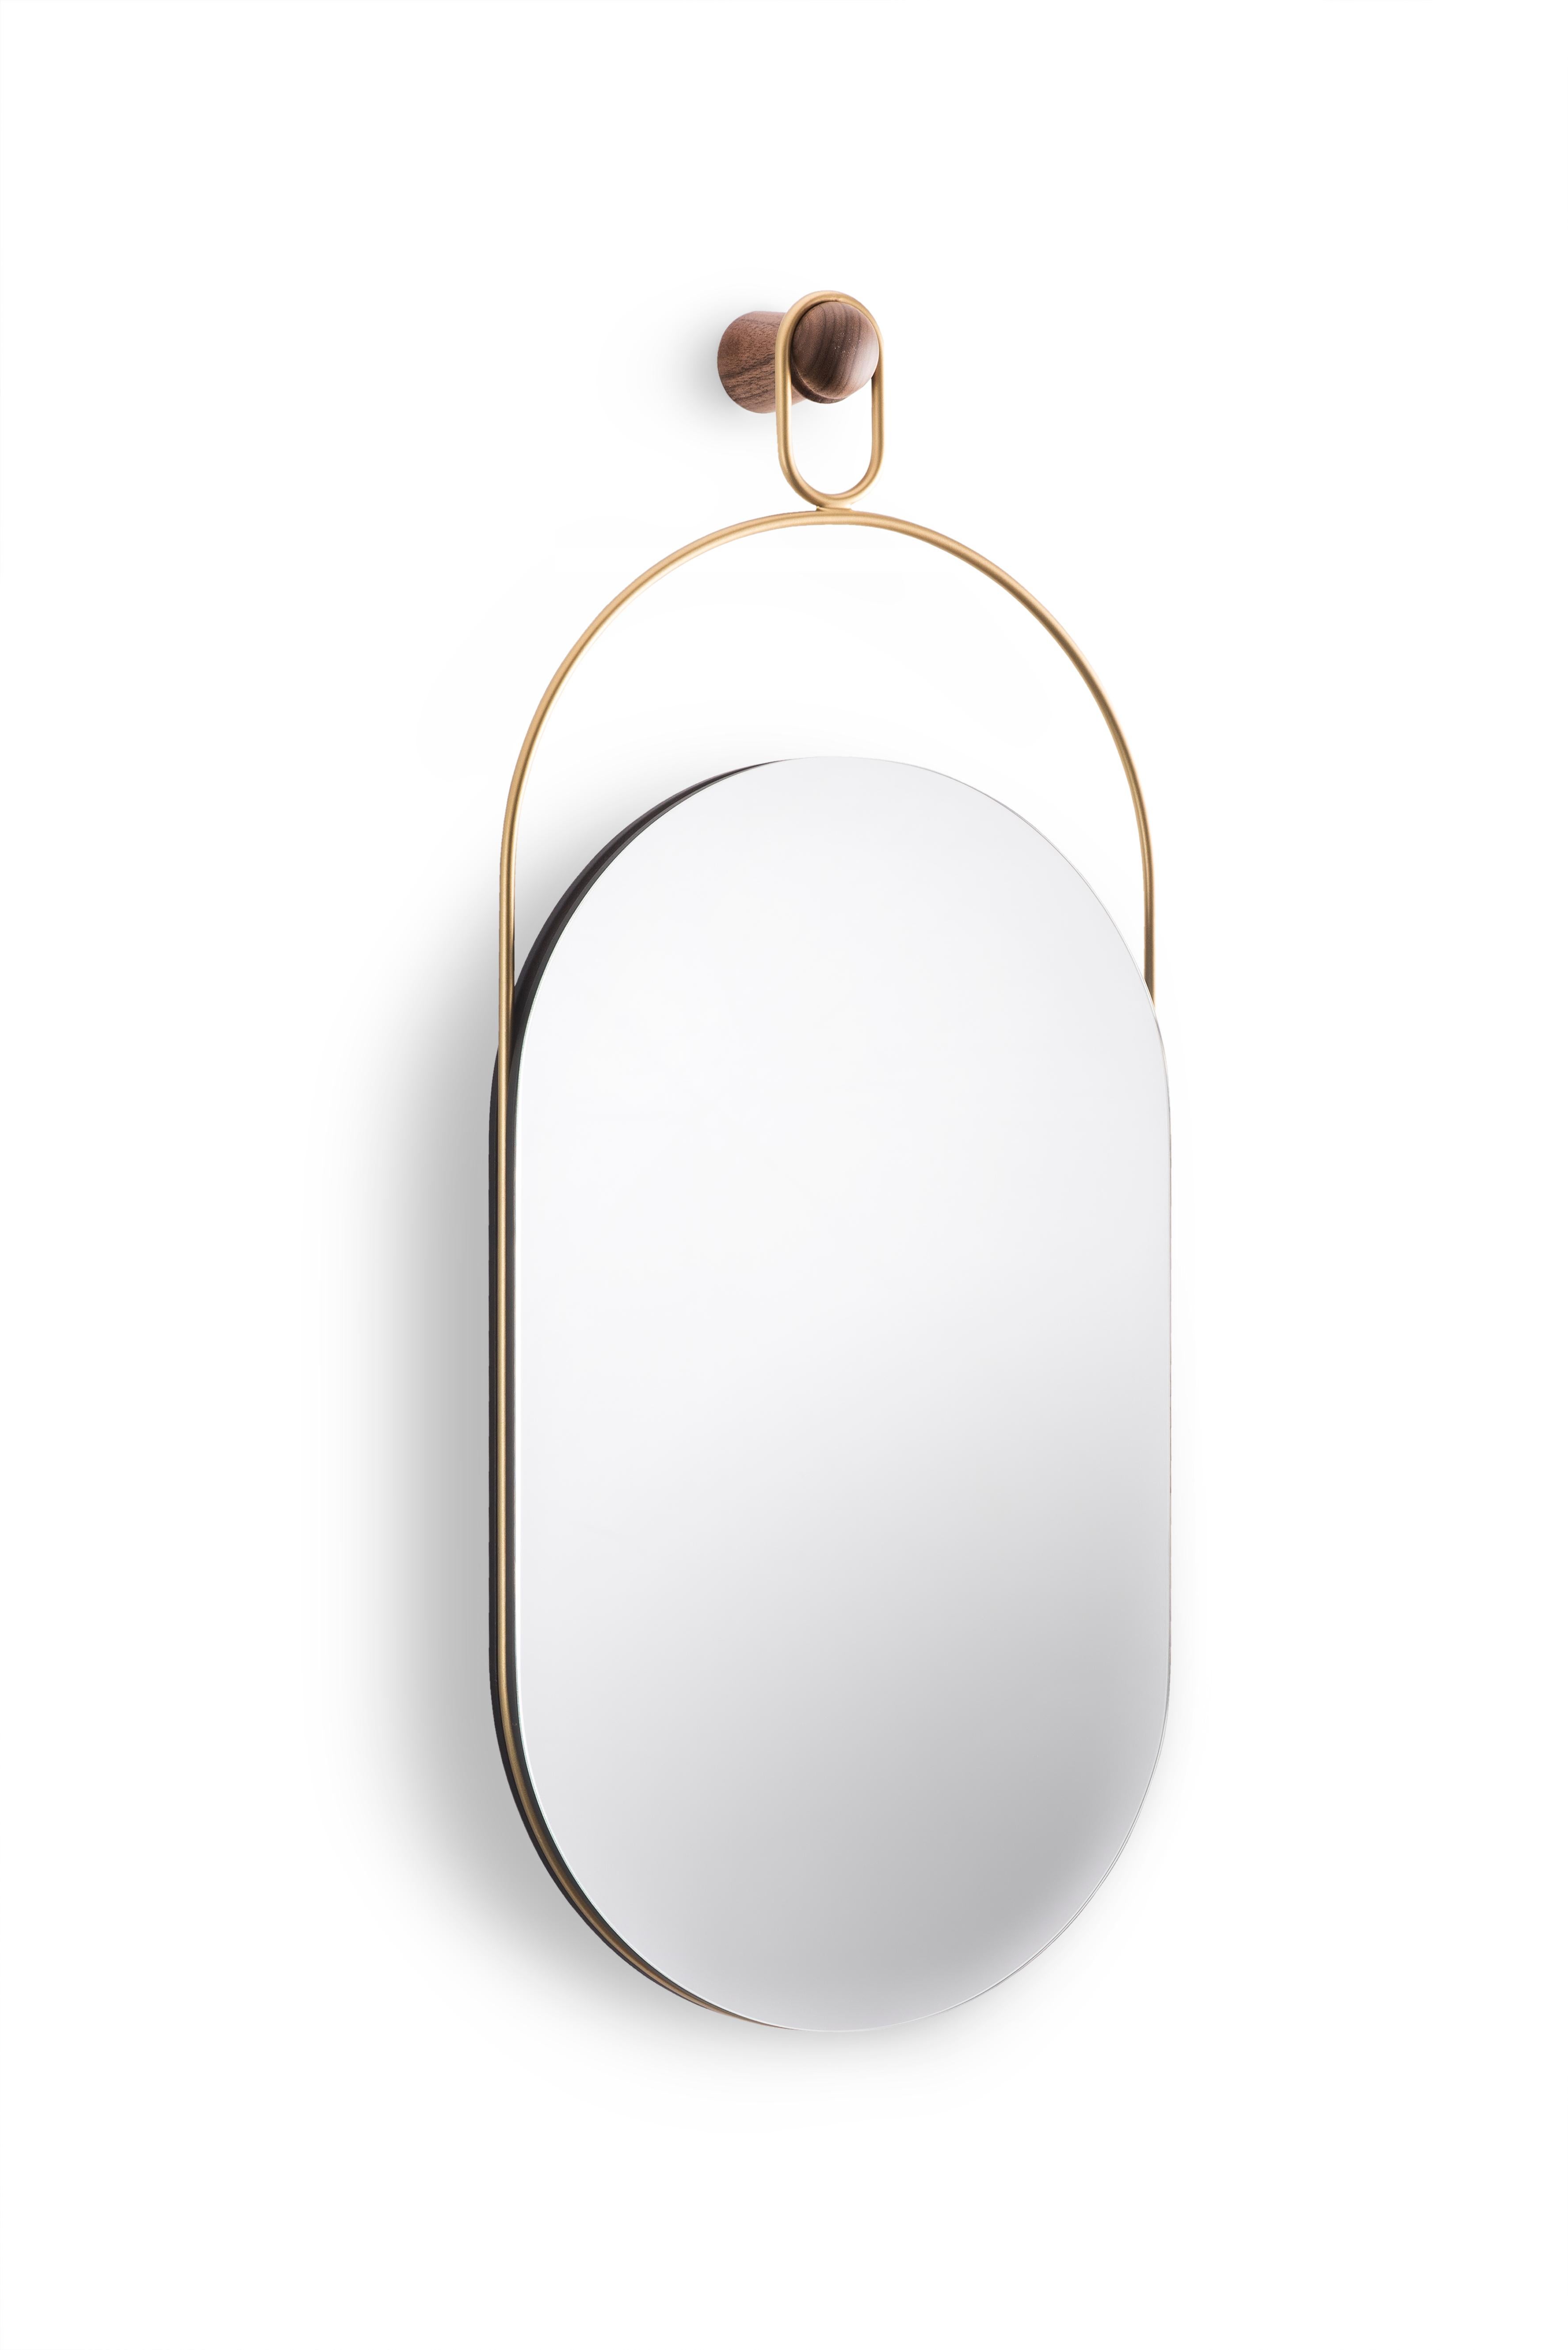 Spanish Nomon Mirror Eslabon by Andres Martinez  For Sale